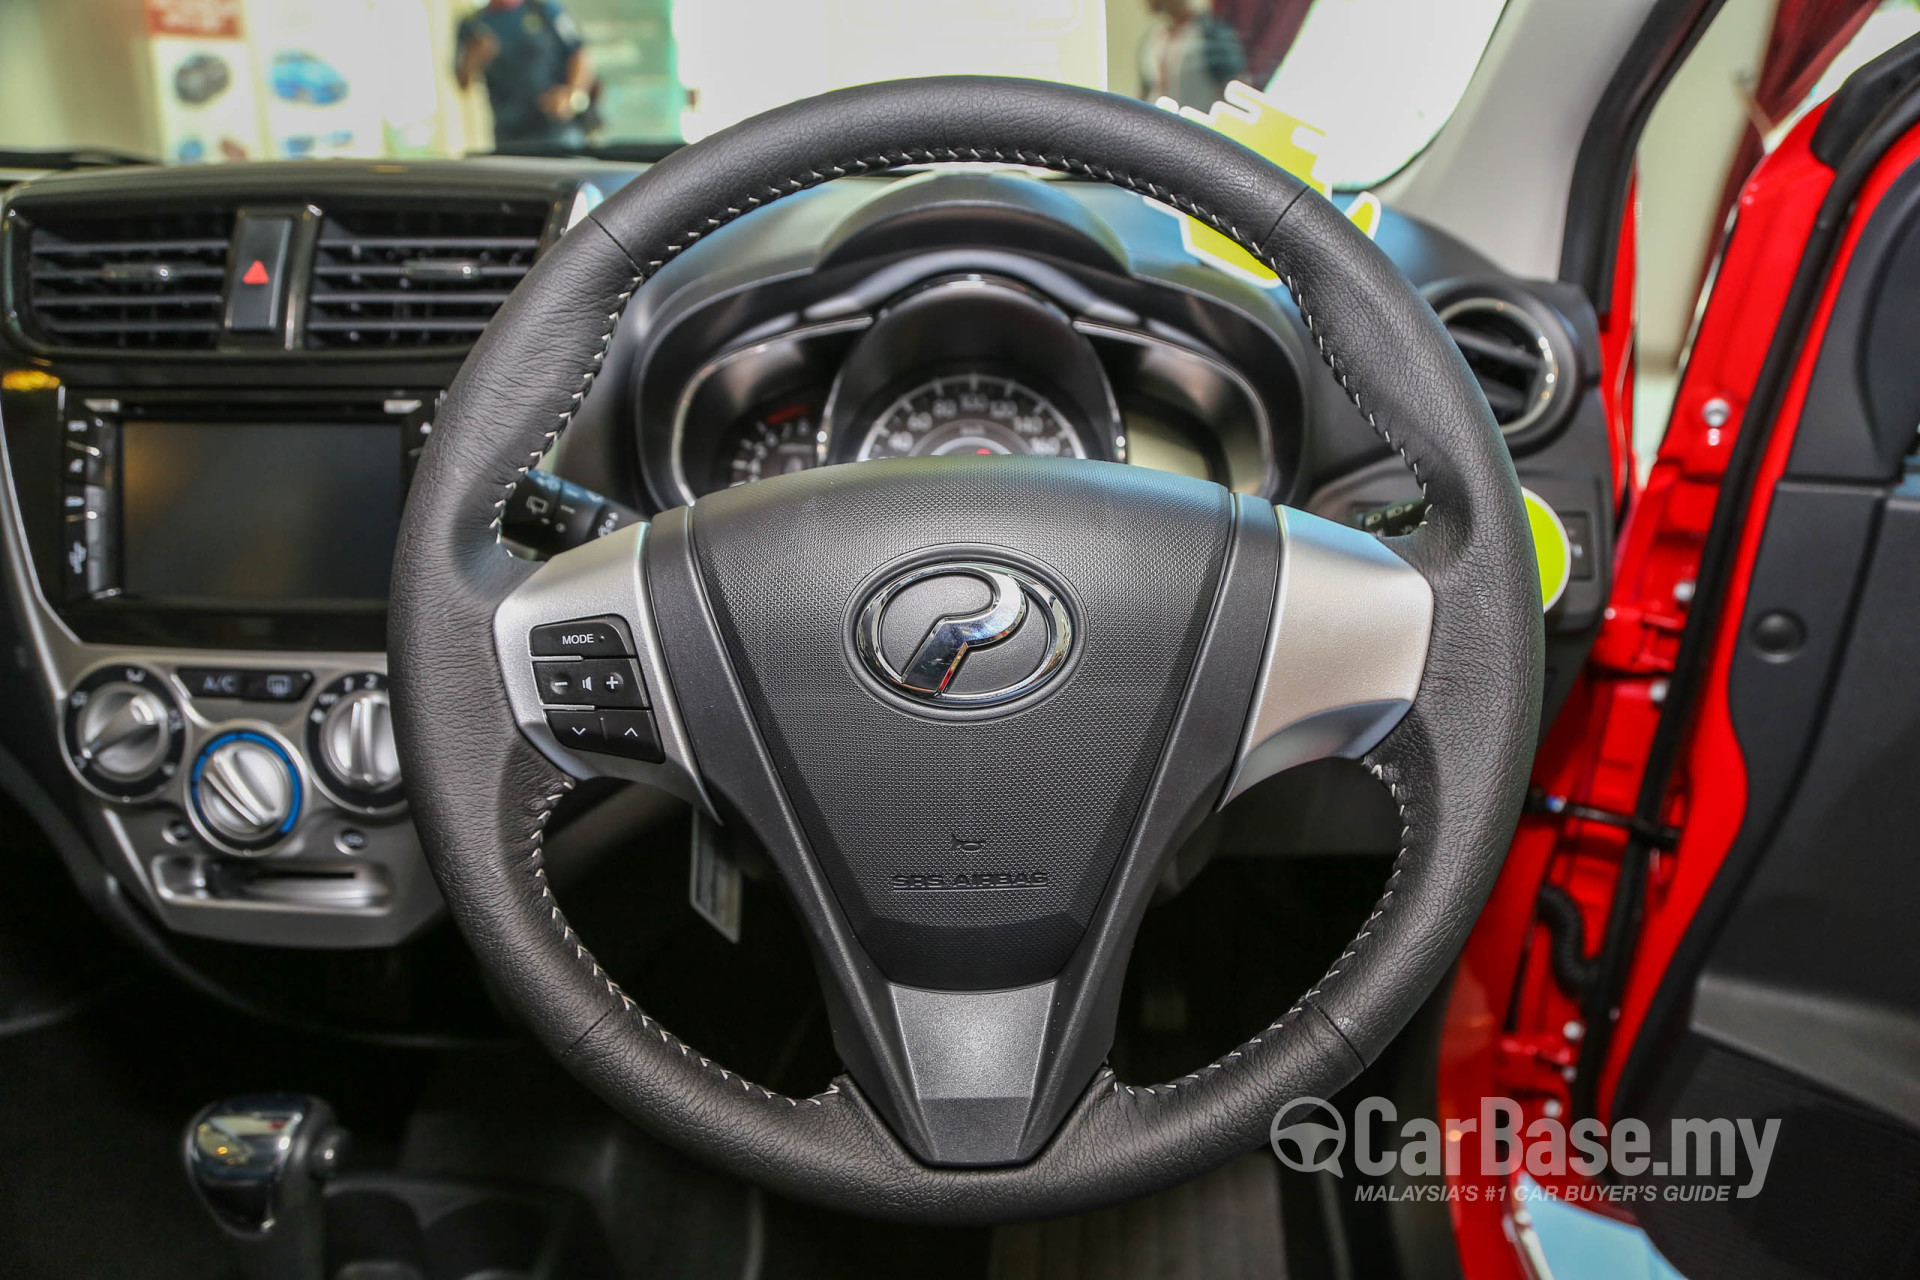 Perodua Axia Mk1 Facelift (2017) Interior Image #35087 in 